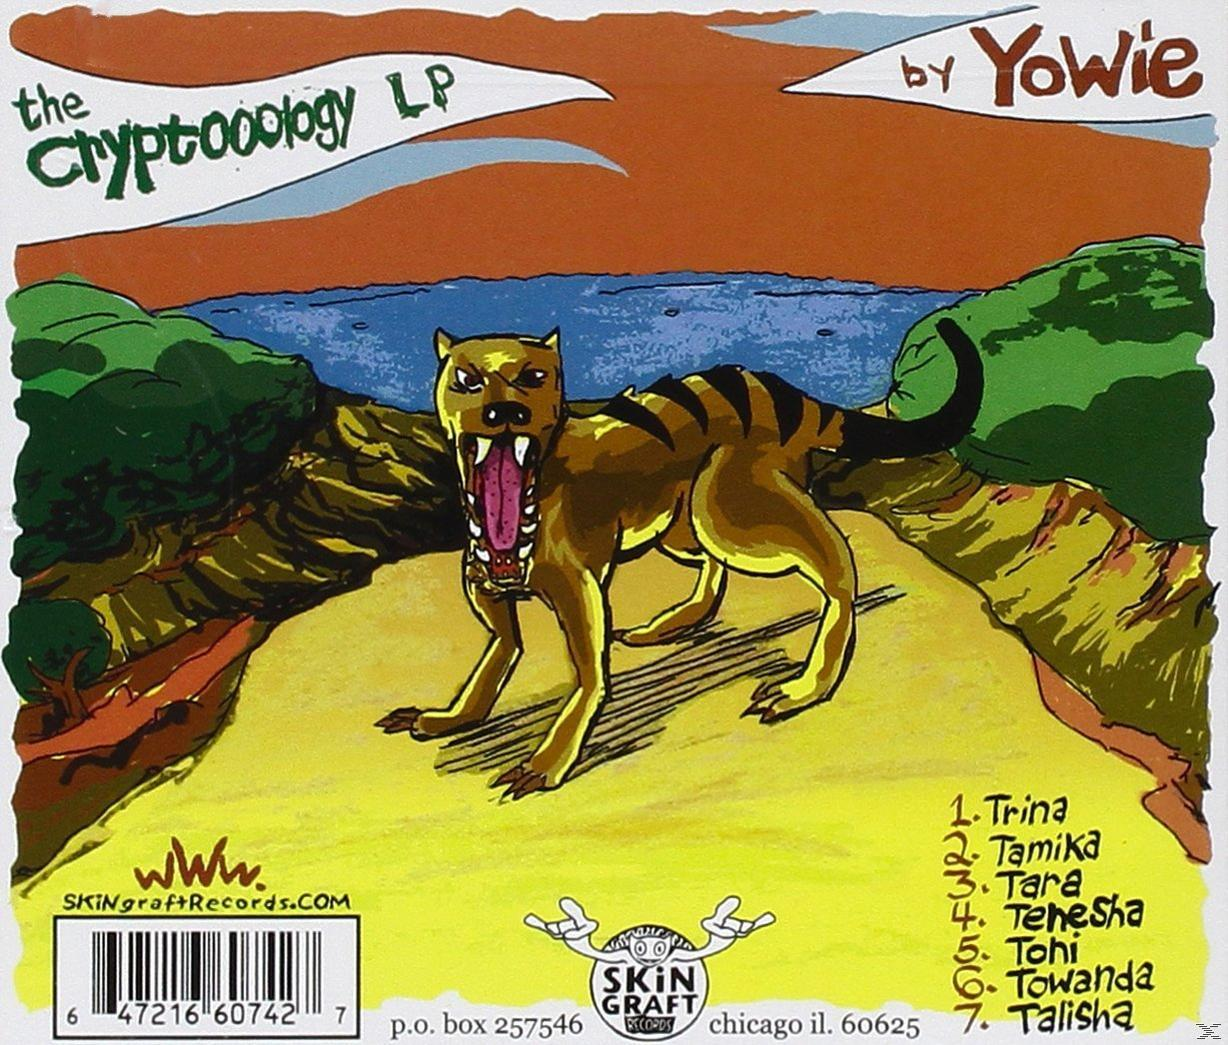 Cryptooology - (CD) - Yowie